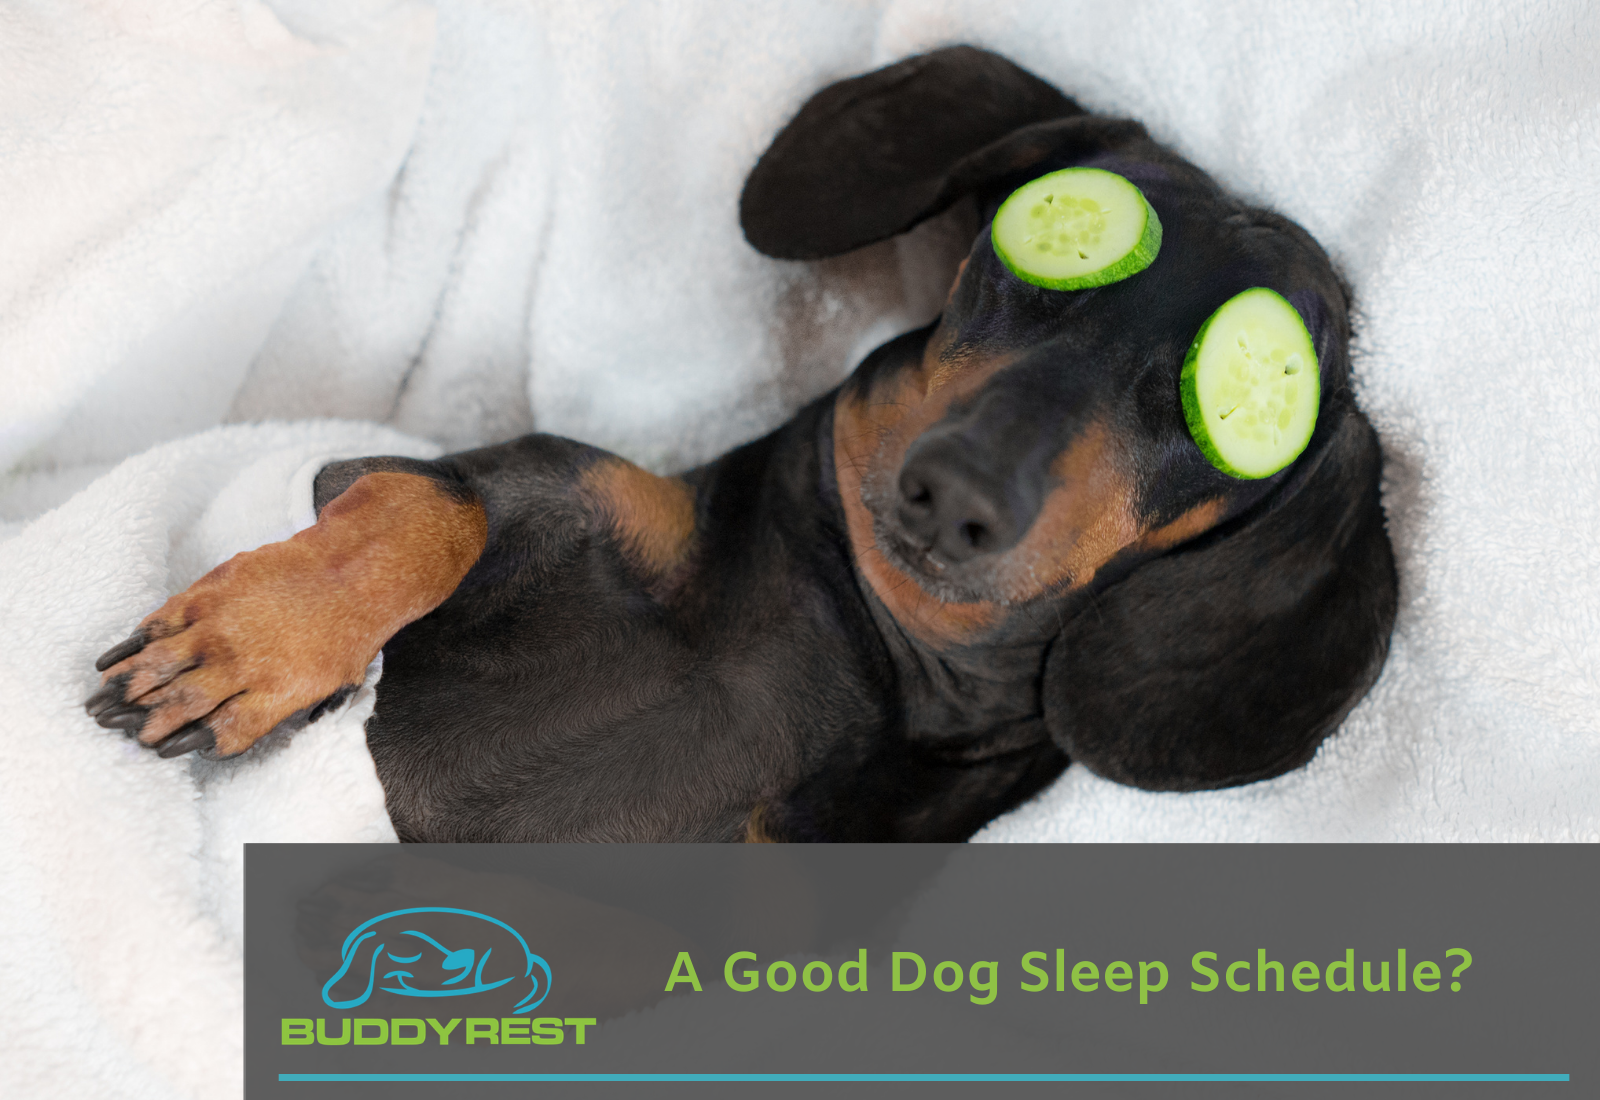 A Good Dog Sleep Schedule?